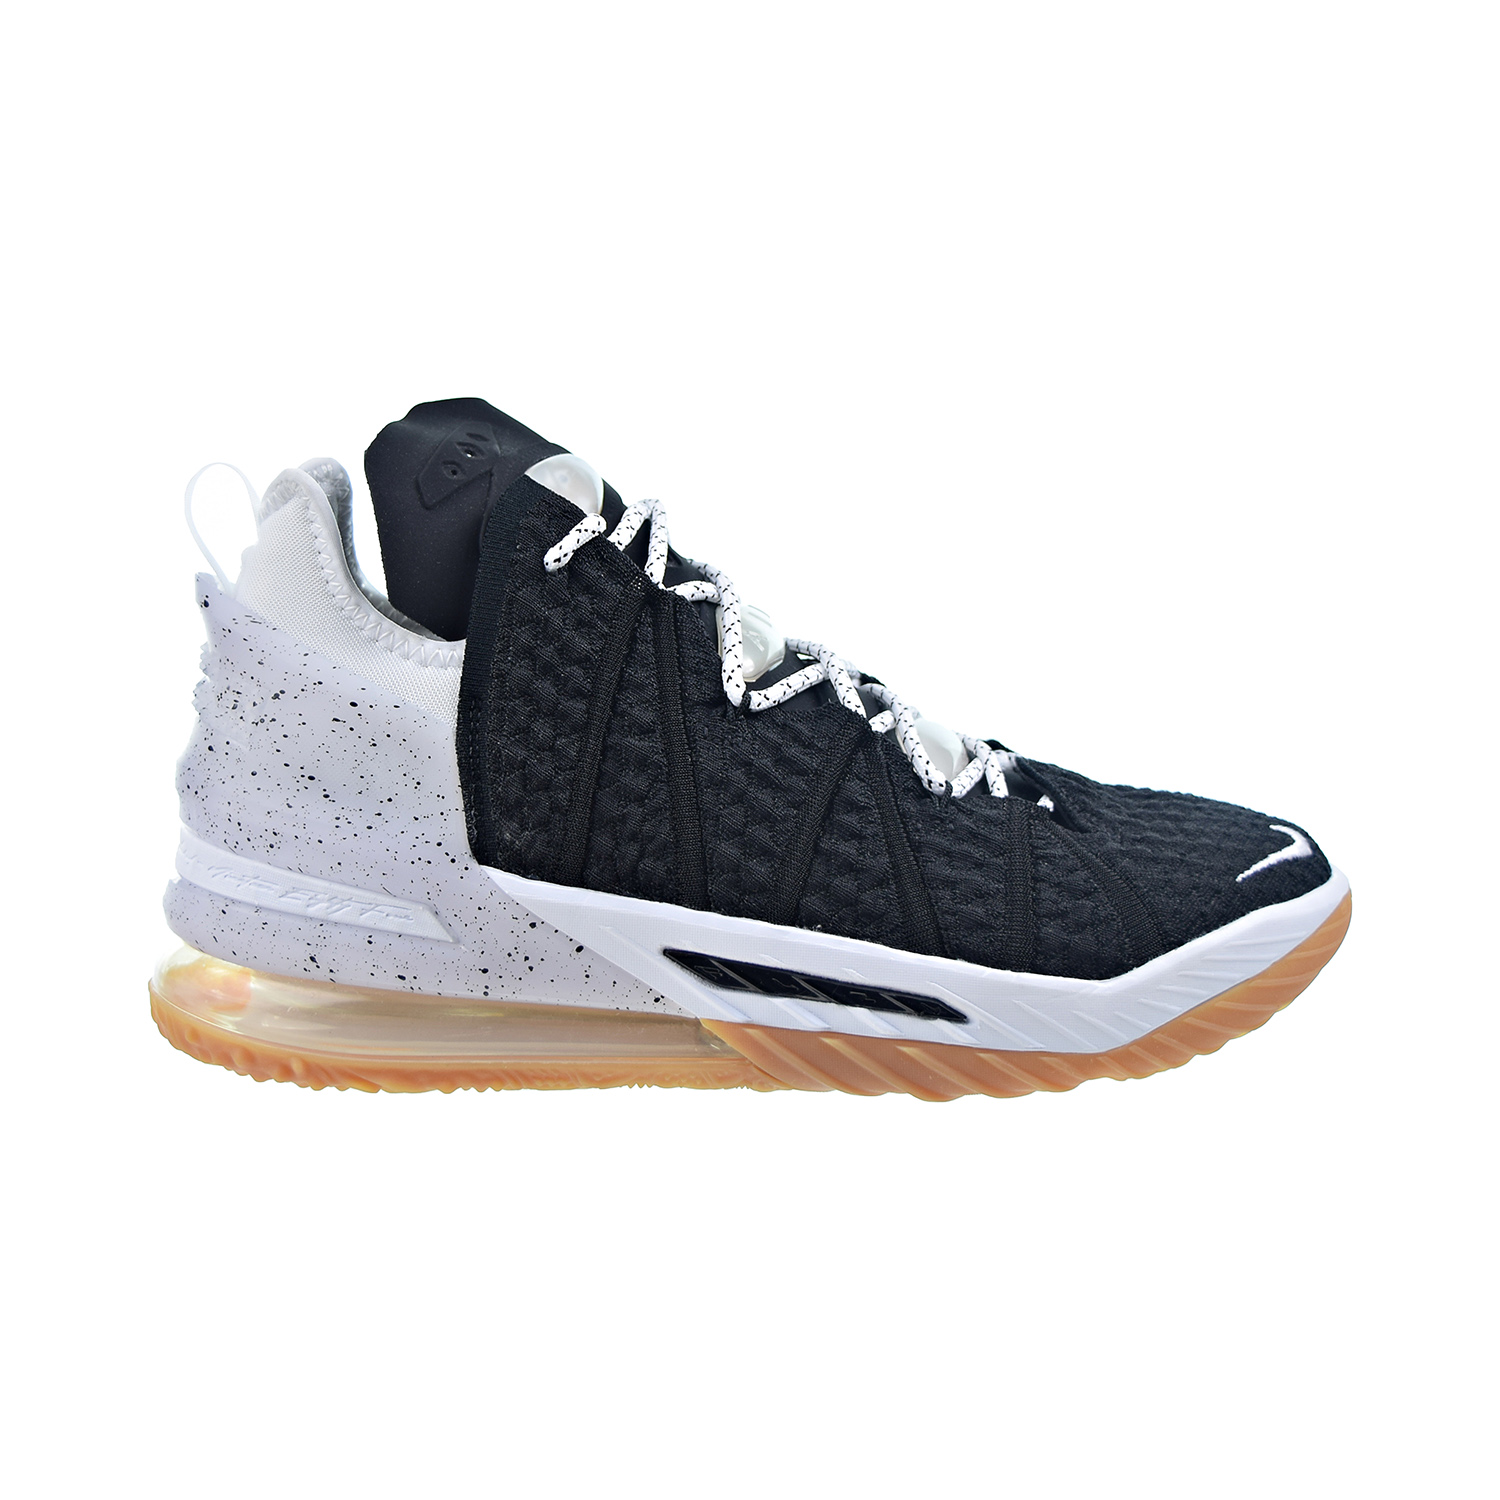 Nike Lebron XVIII Men's Basketball Shoes Black-White-Gum CQ9283-007 | eBay